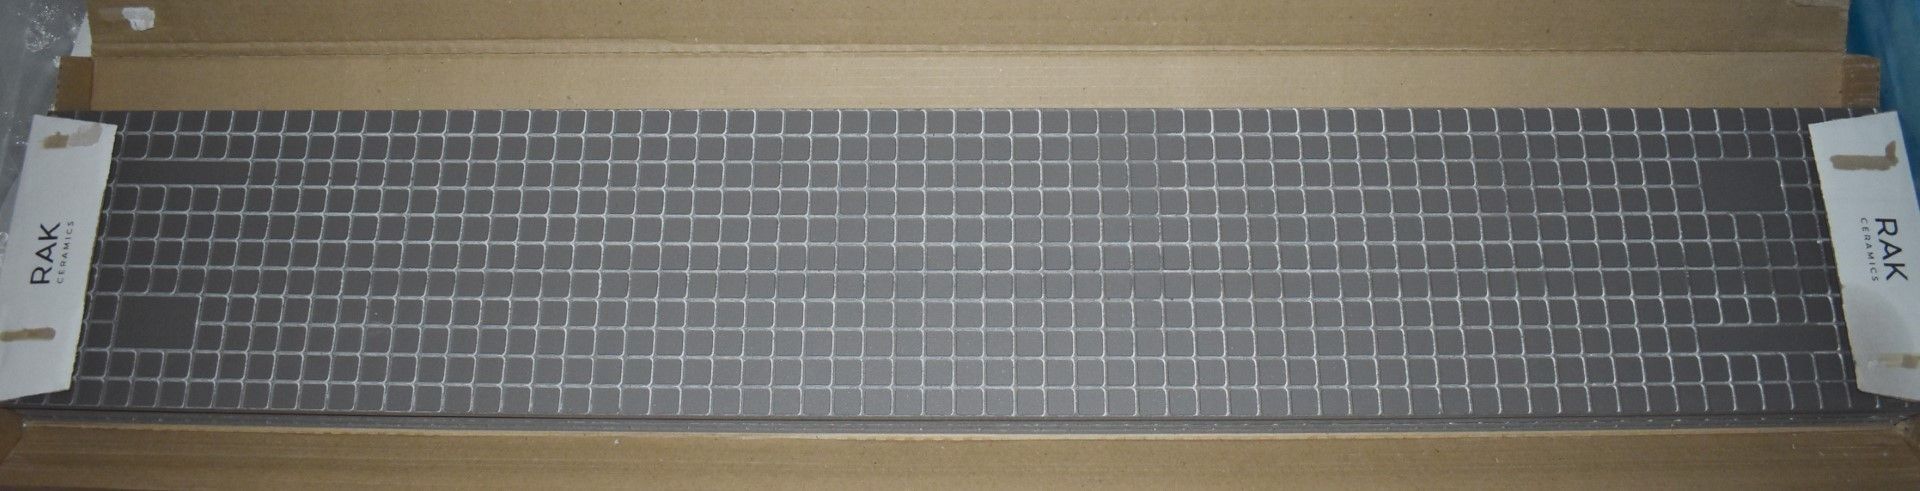 12 x Boxes of RAK Porcelain Floor or Wall Tiles - M Project Wood Design in Dark Grey - 19.5 x 120 cm - Image 9 of 11